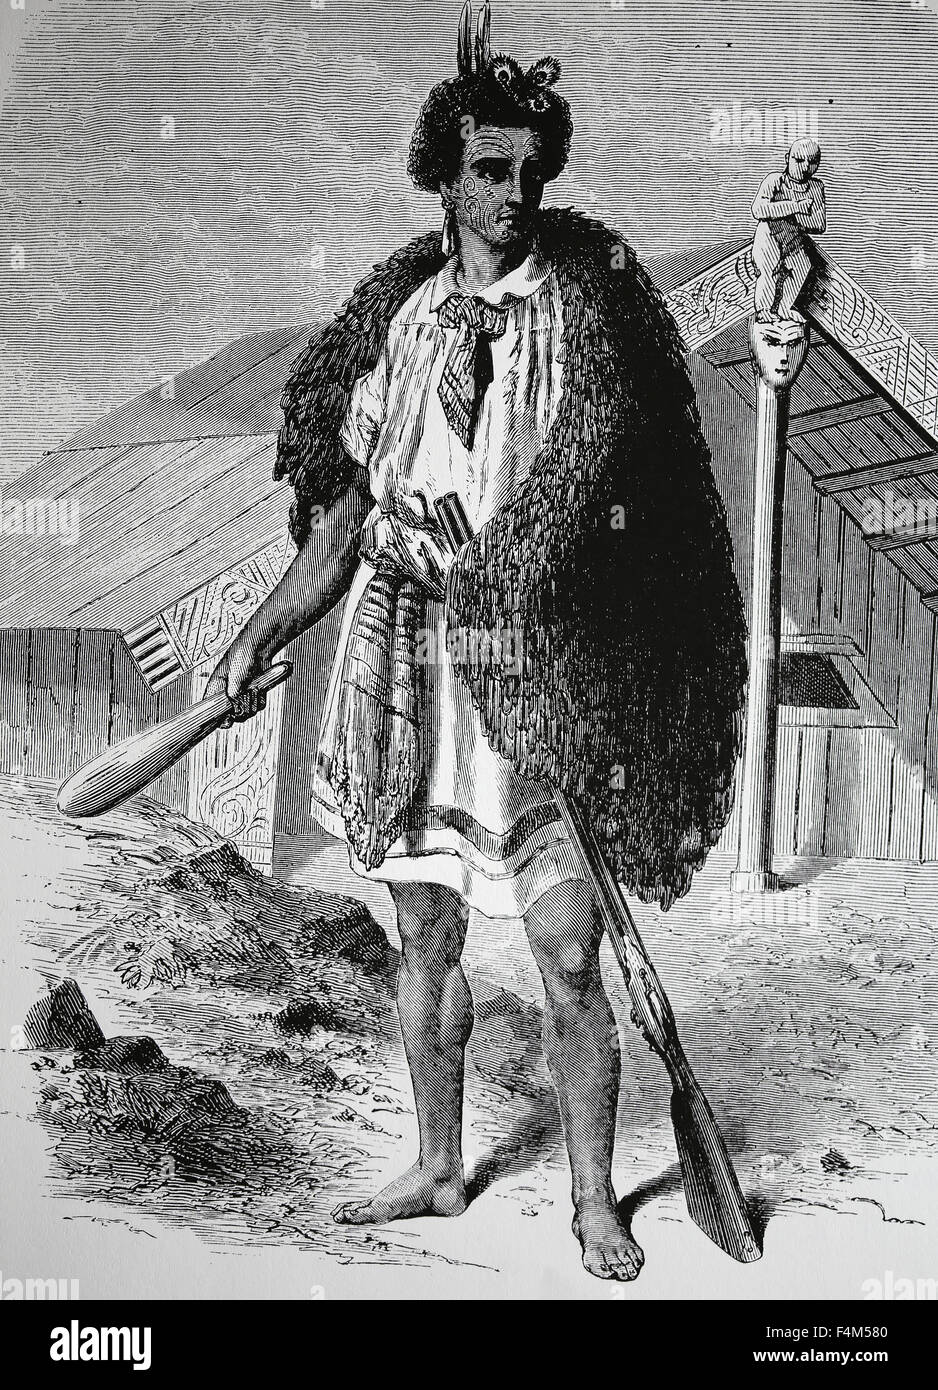 Pacific Islands. New Zealand. Maori chief, c. 1860. Engraving. Stock Photo